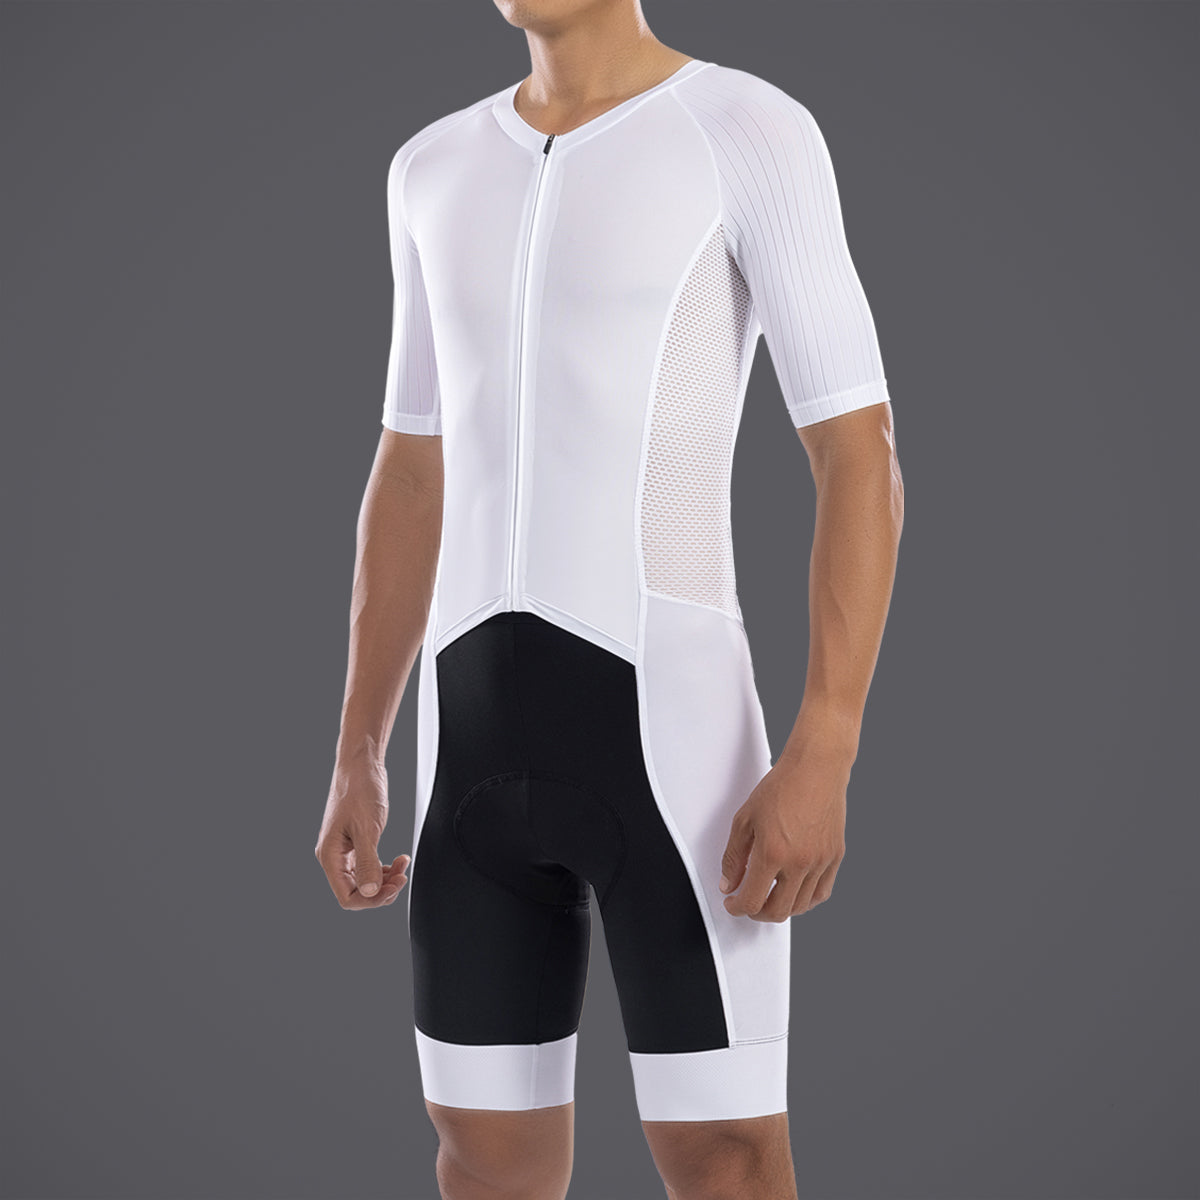 SANTIC CUSTOM SHORT SLEEVE SPEEDSUIT Triathlon Suit